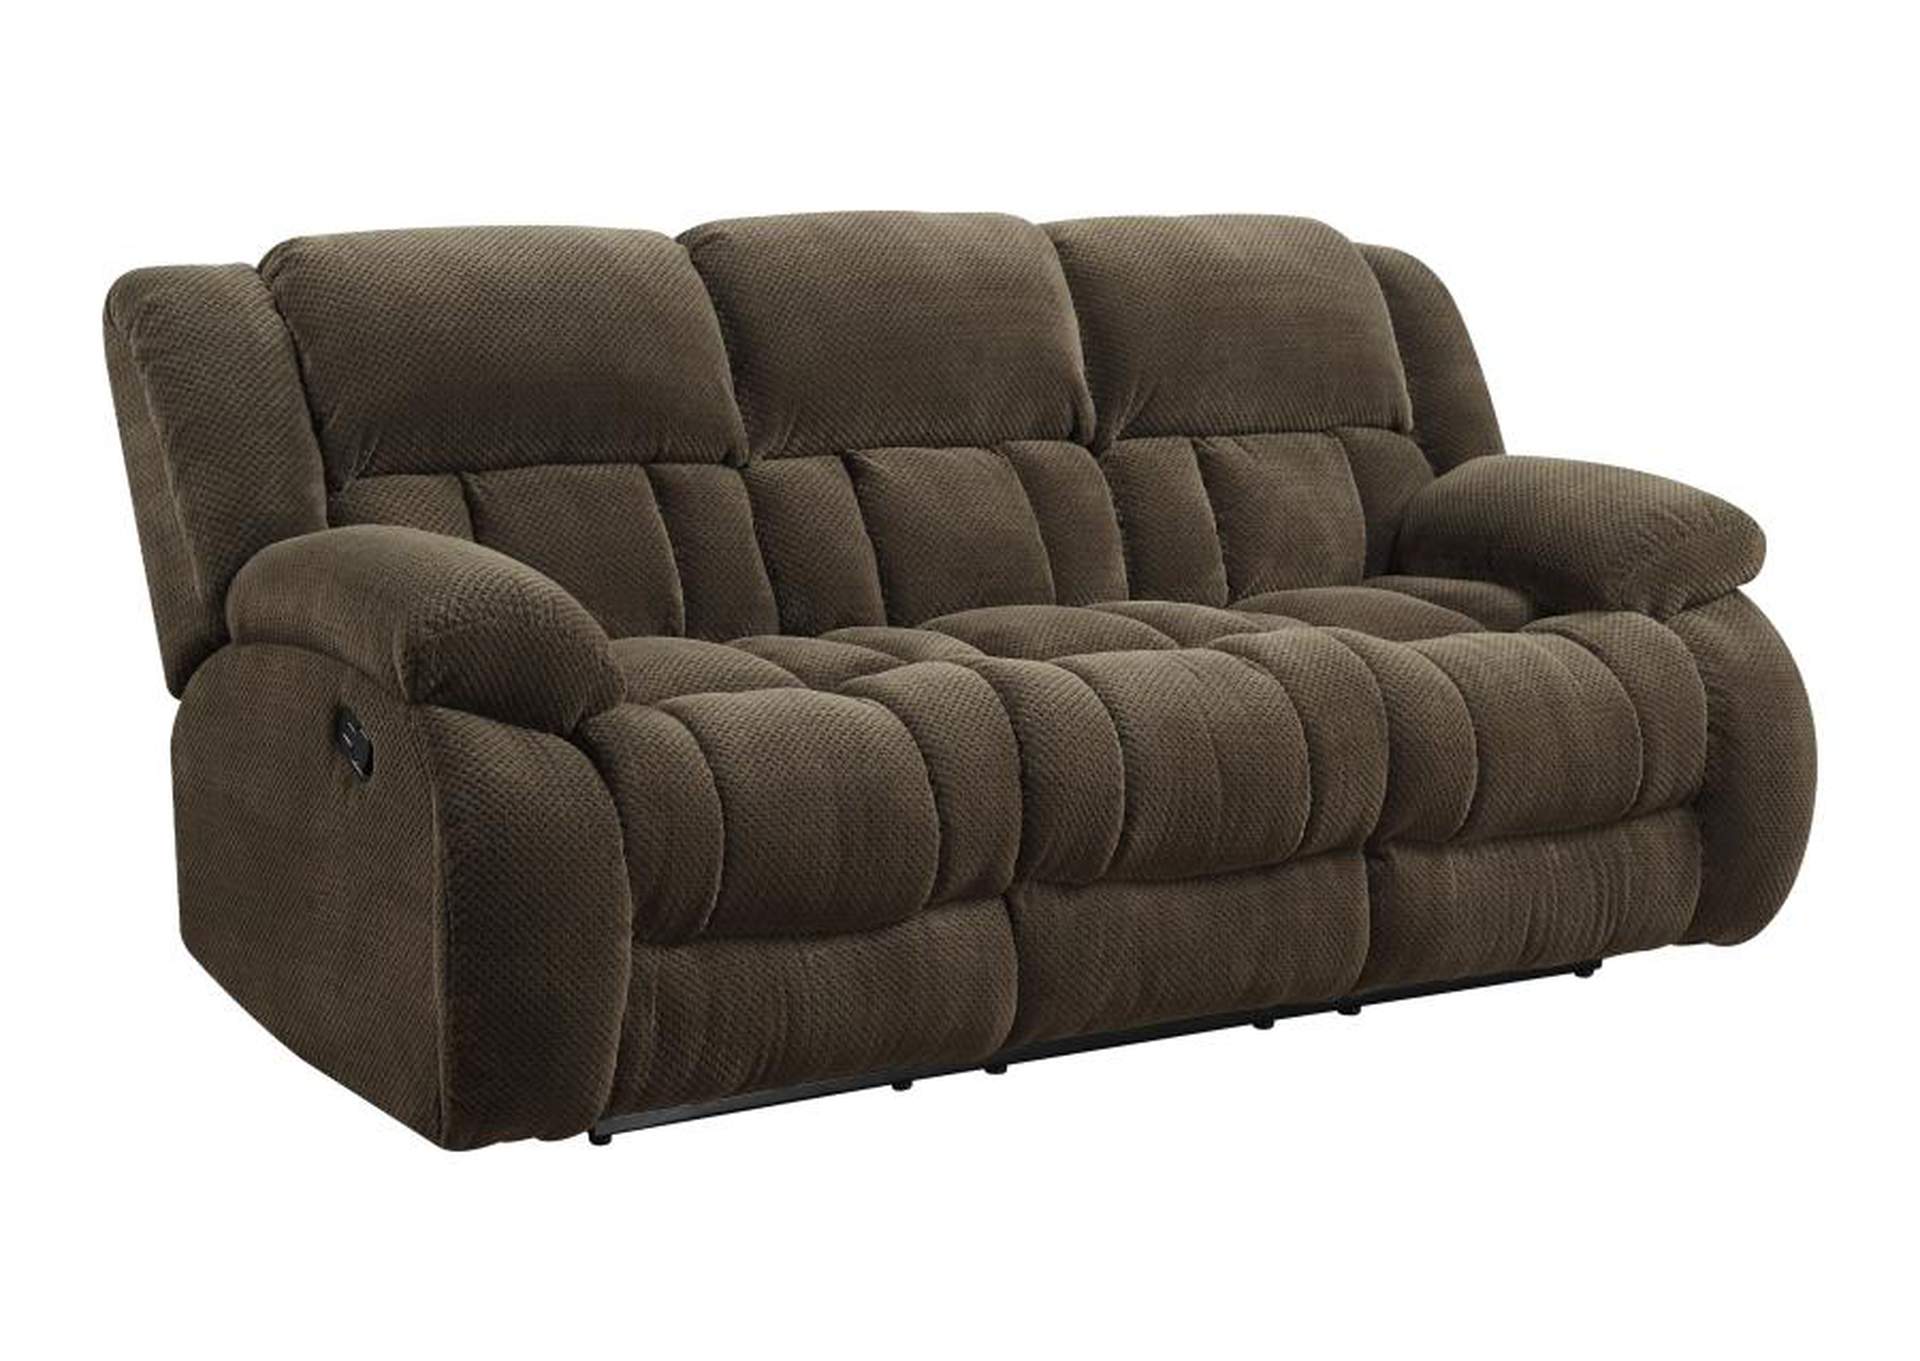 Weissman Pillow Top Arm Motion Sofa Chocolate,Coaster Furniture